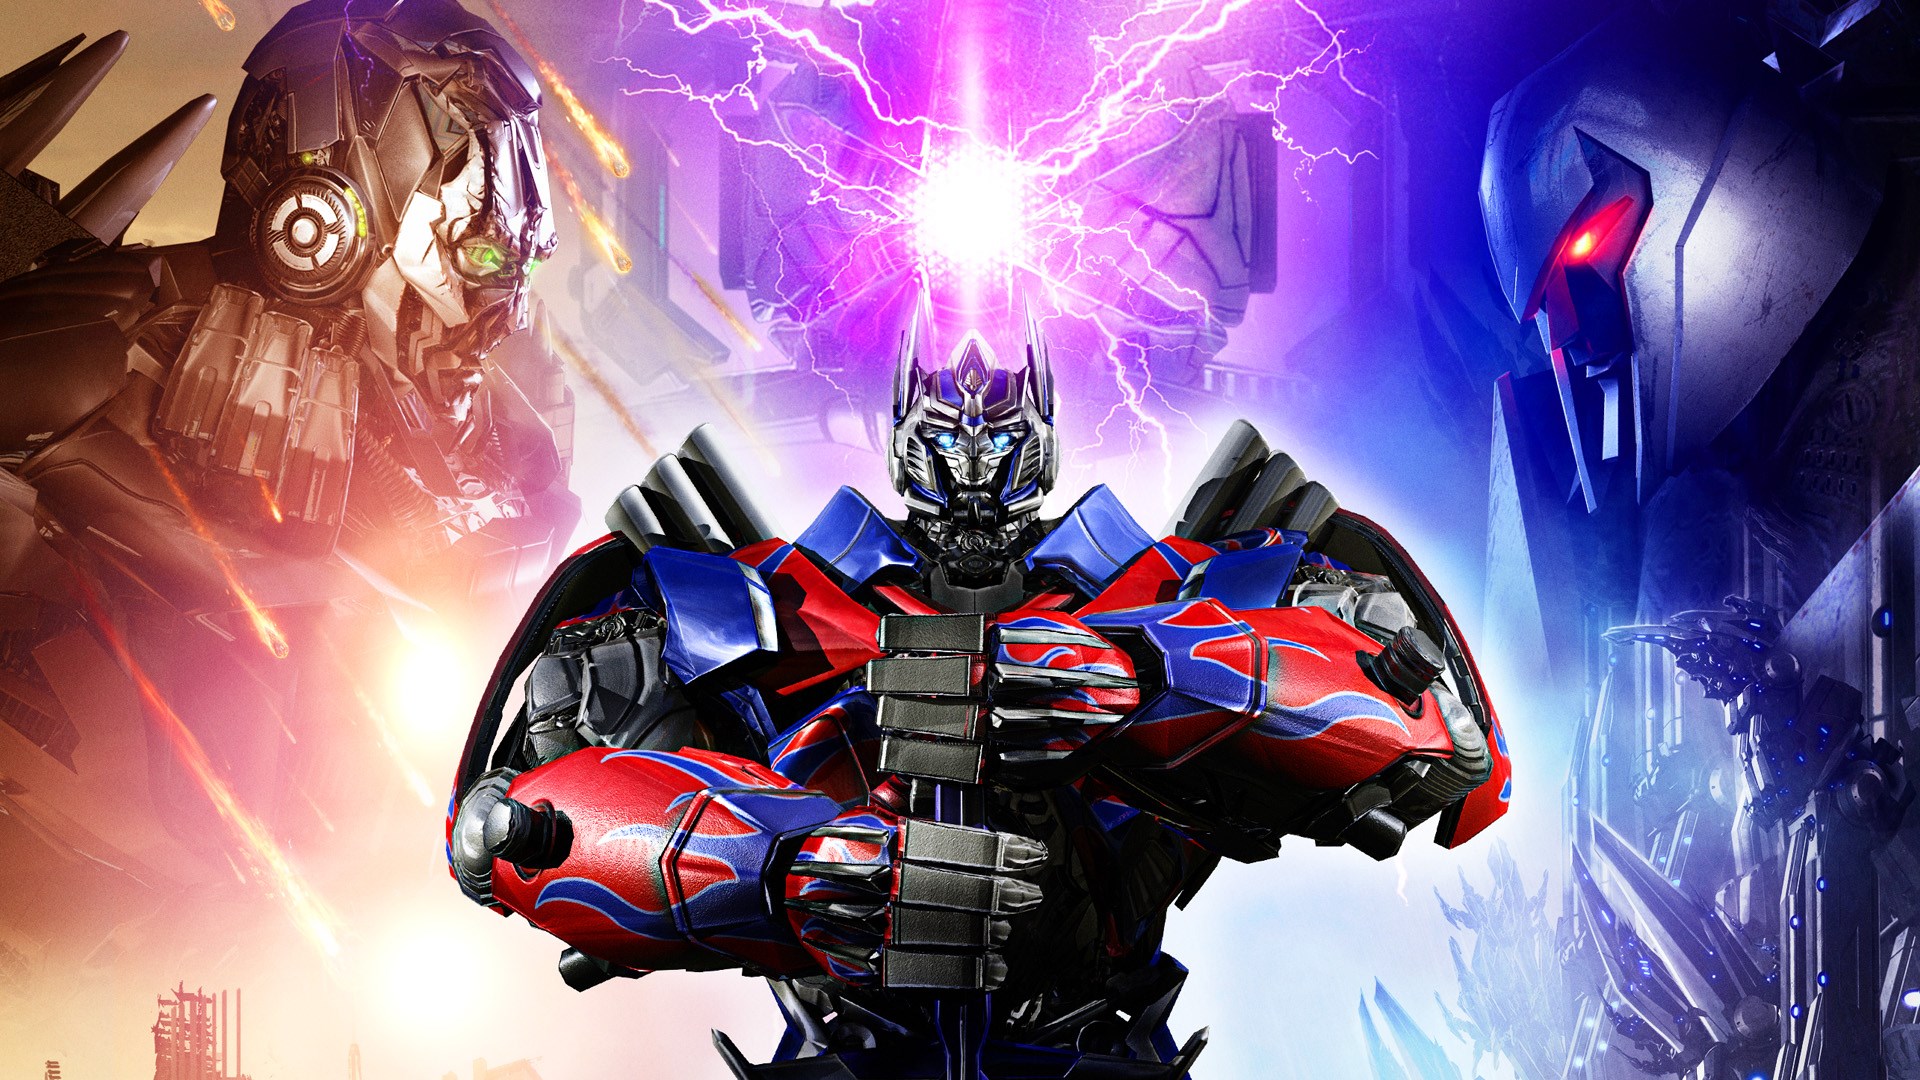 transformers rise of the dark spark movie